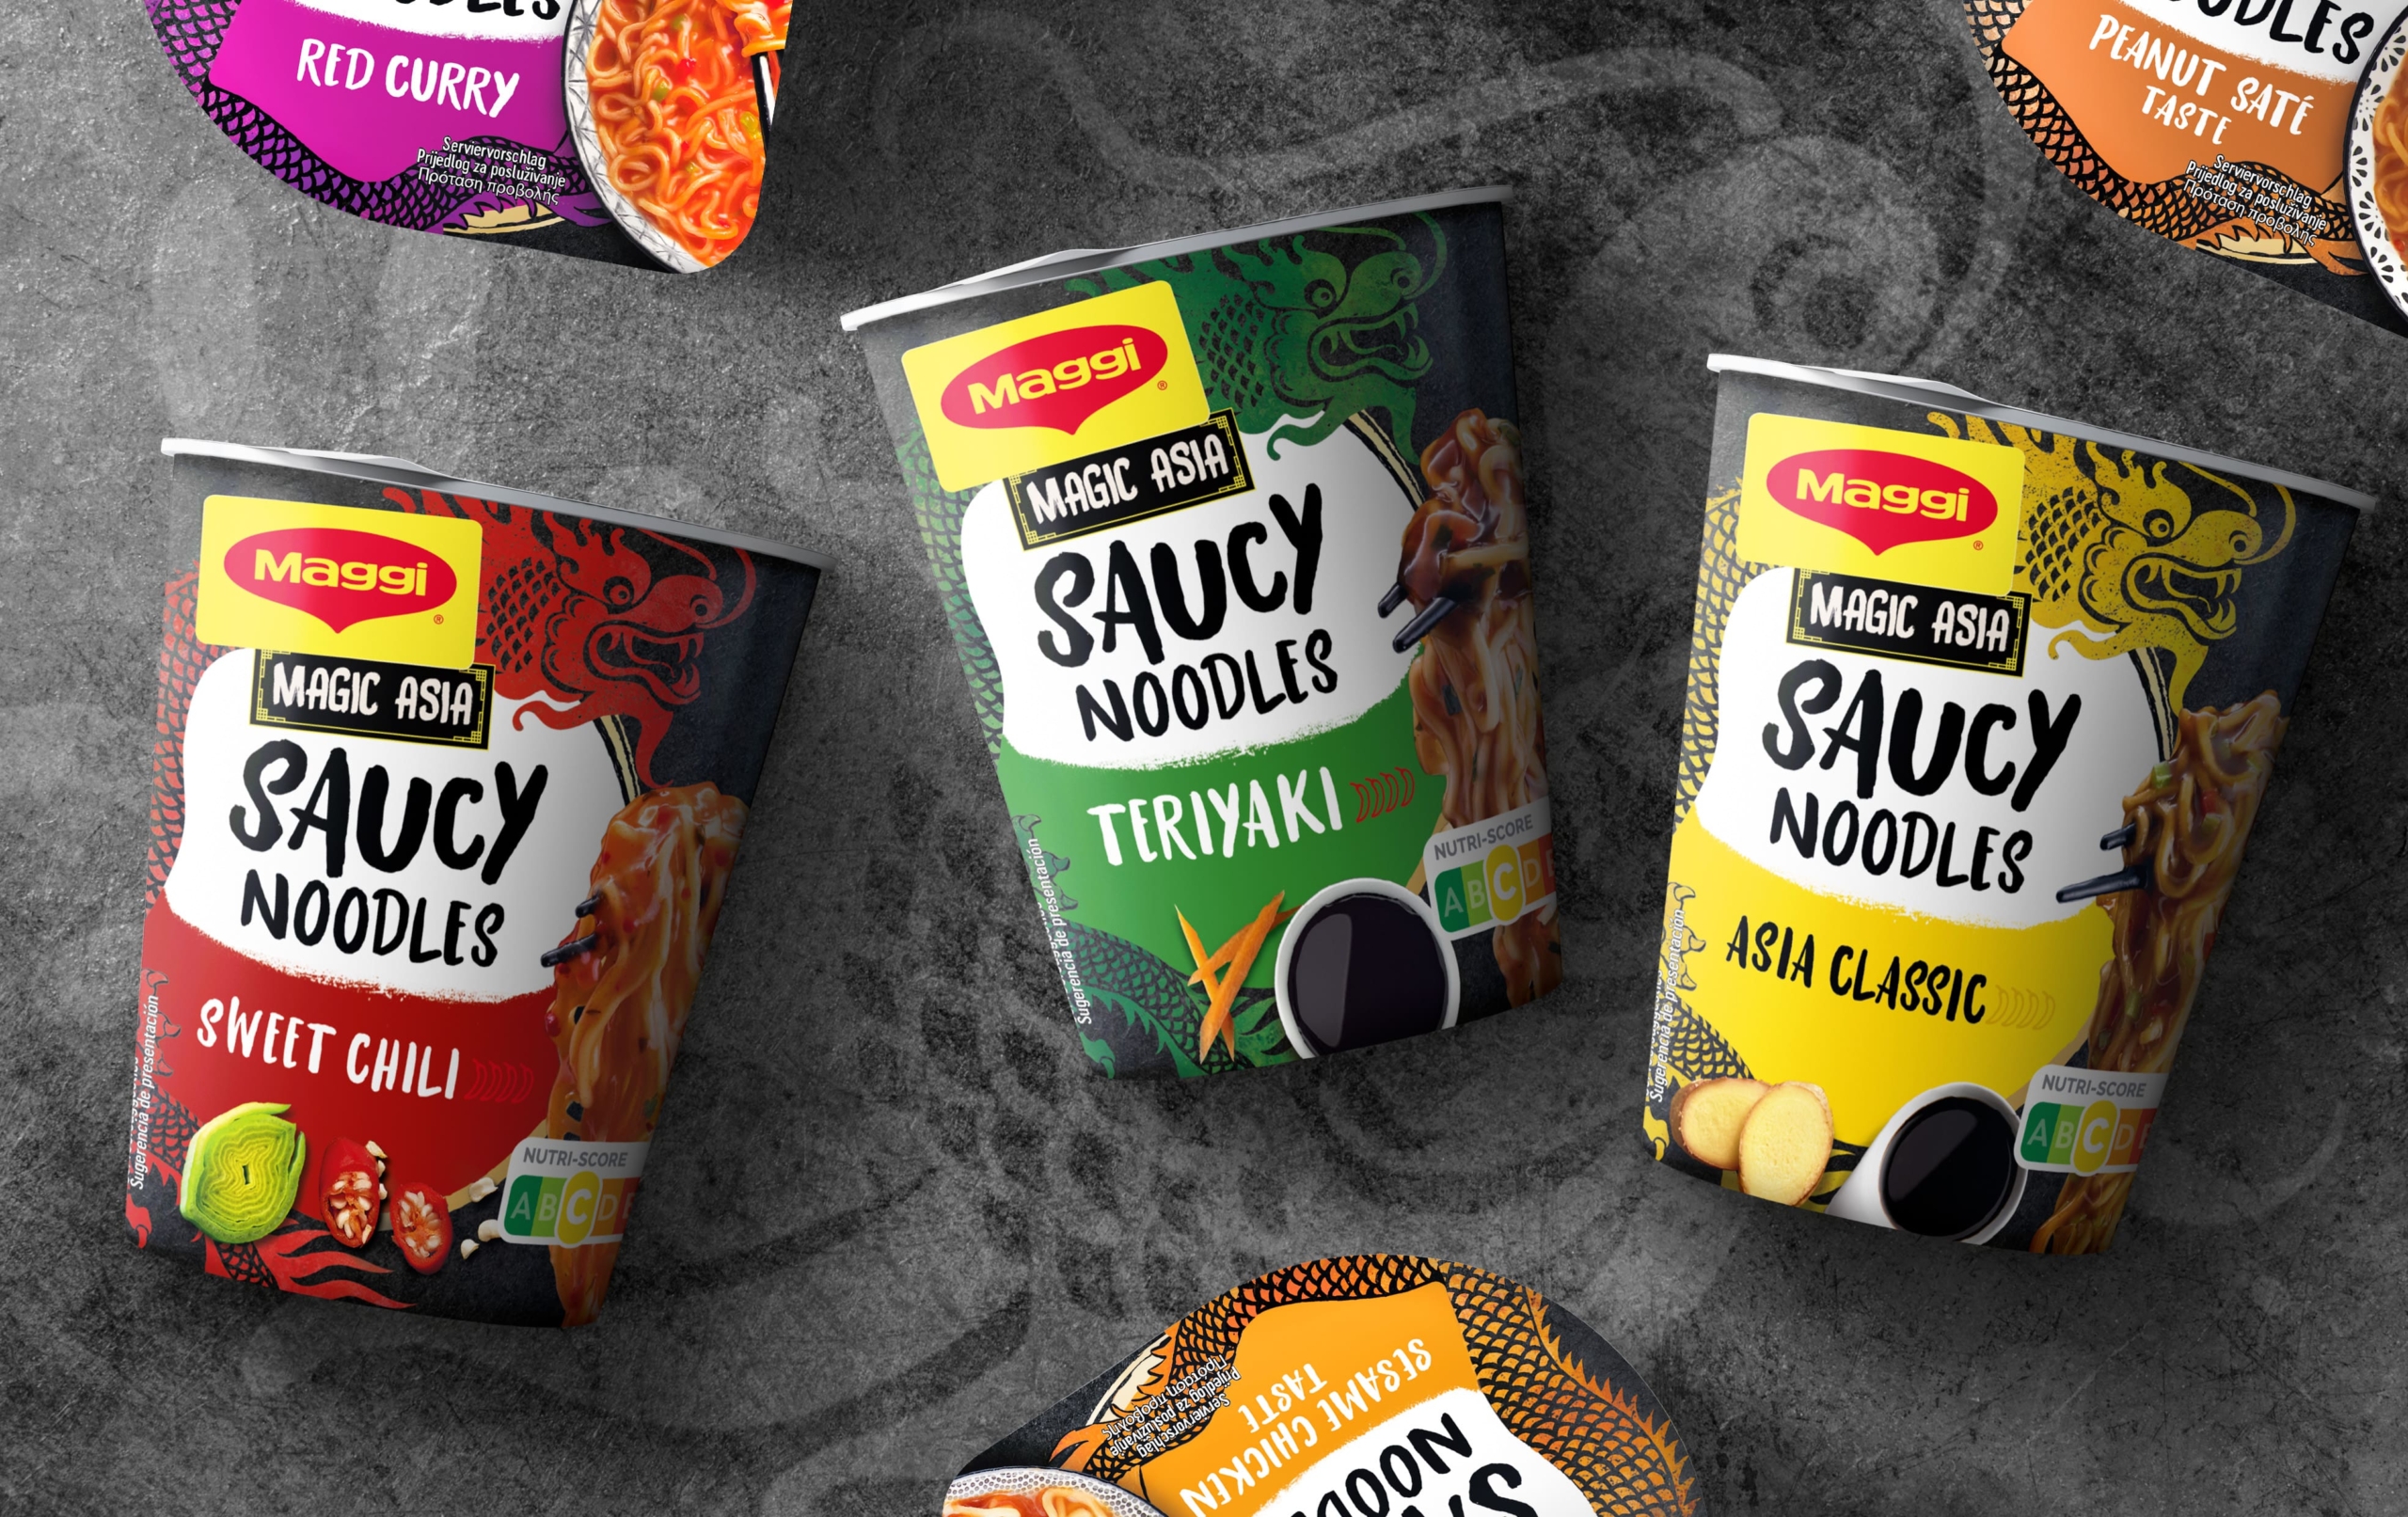 Komposition des Packaging Designs für Maggi Magic Asia Saucy Noodles